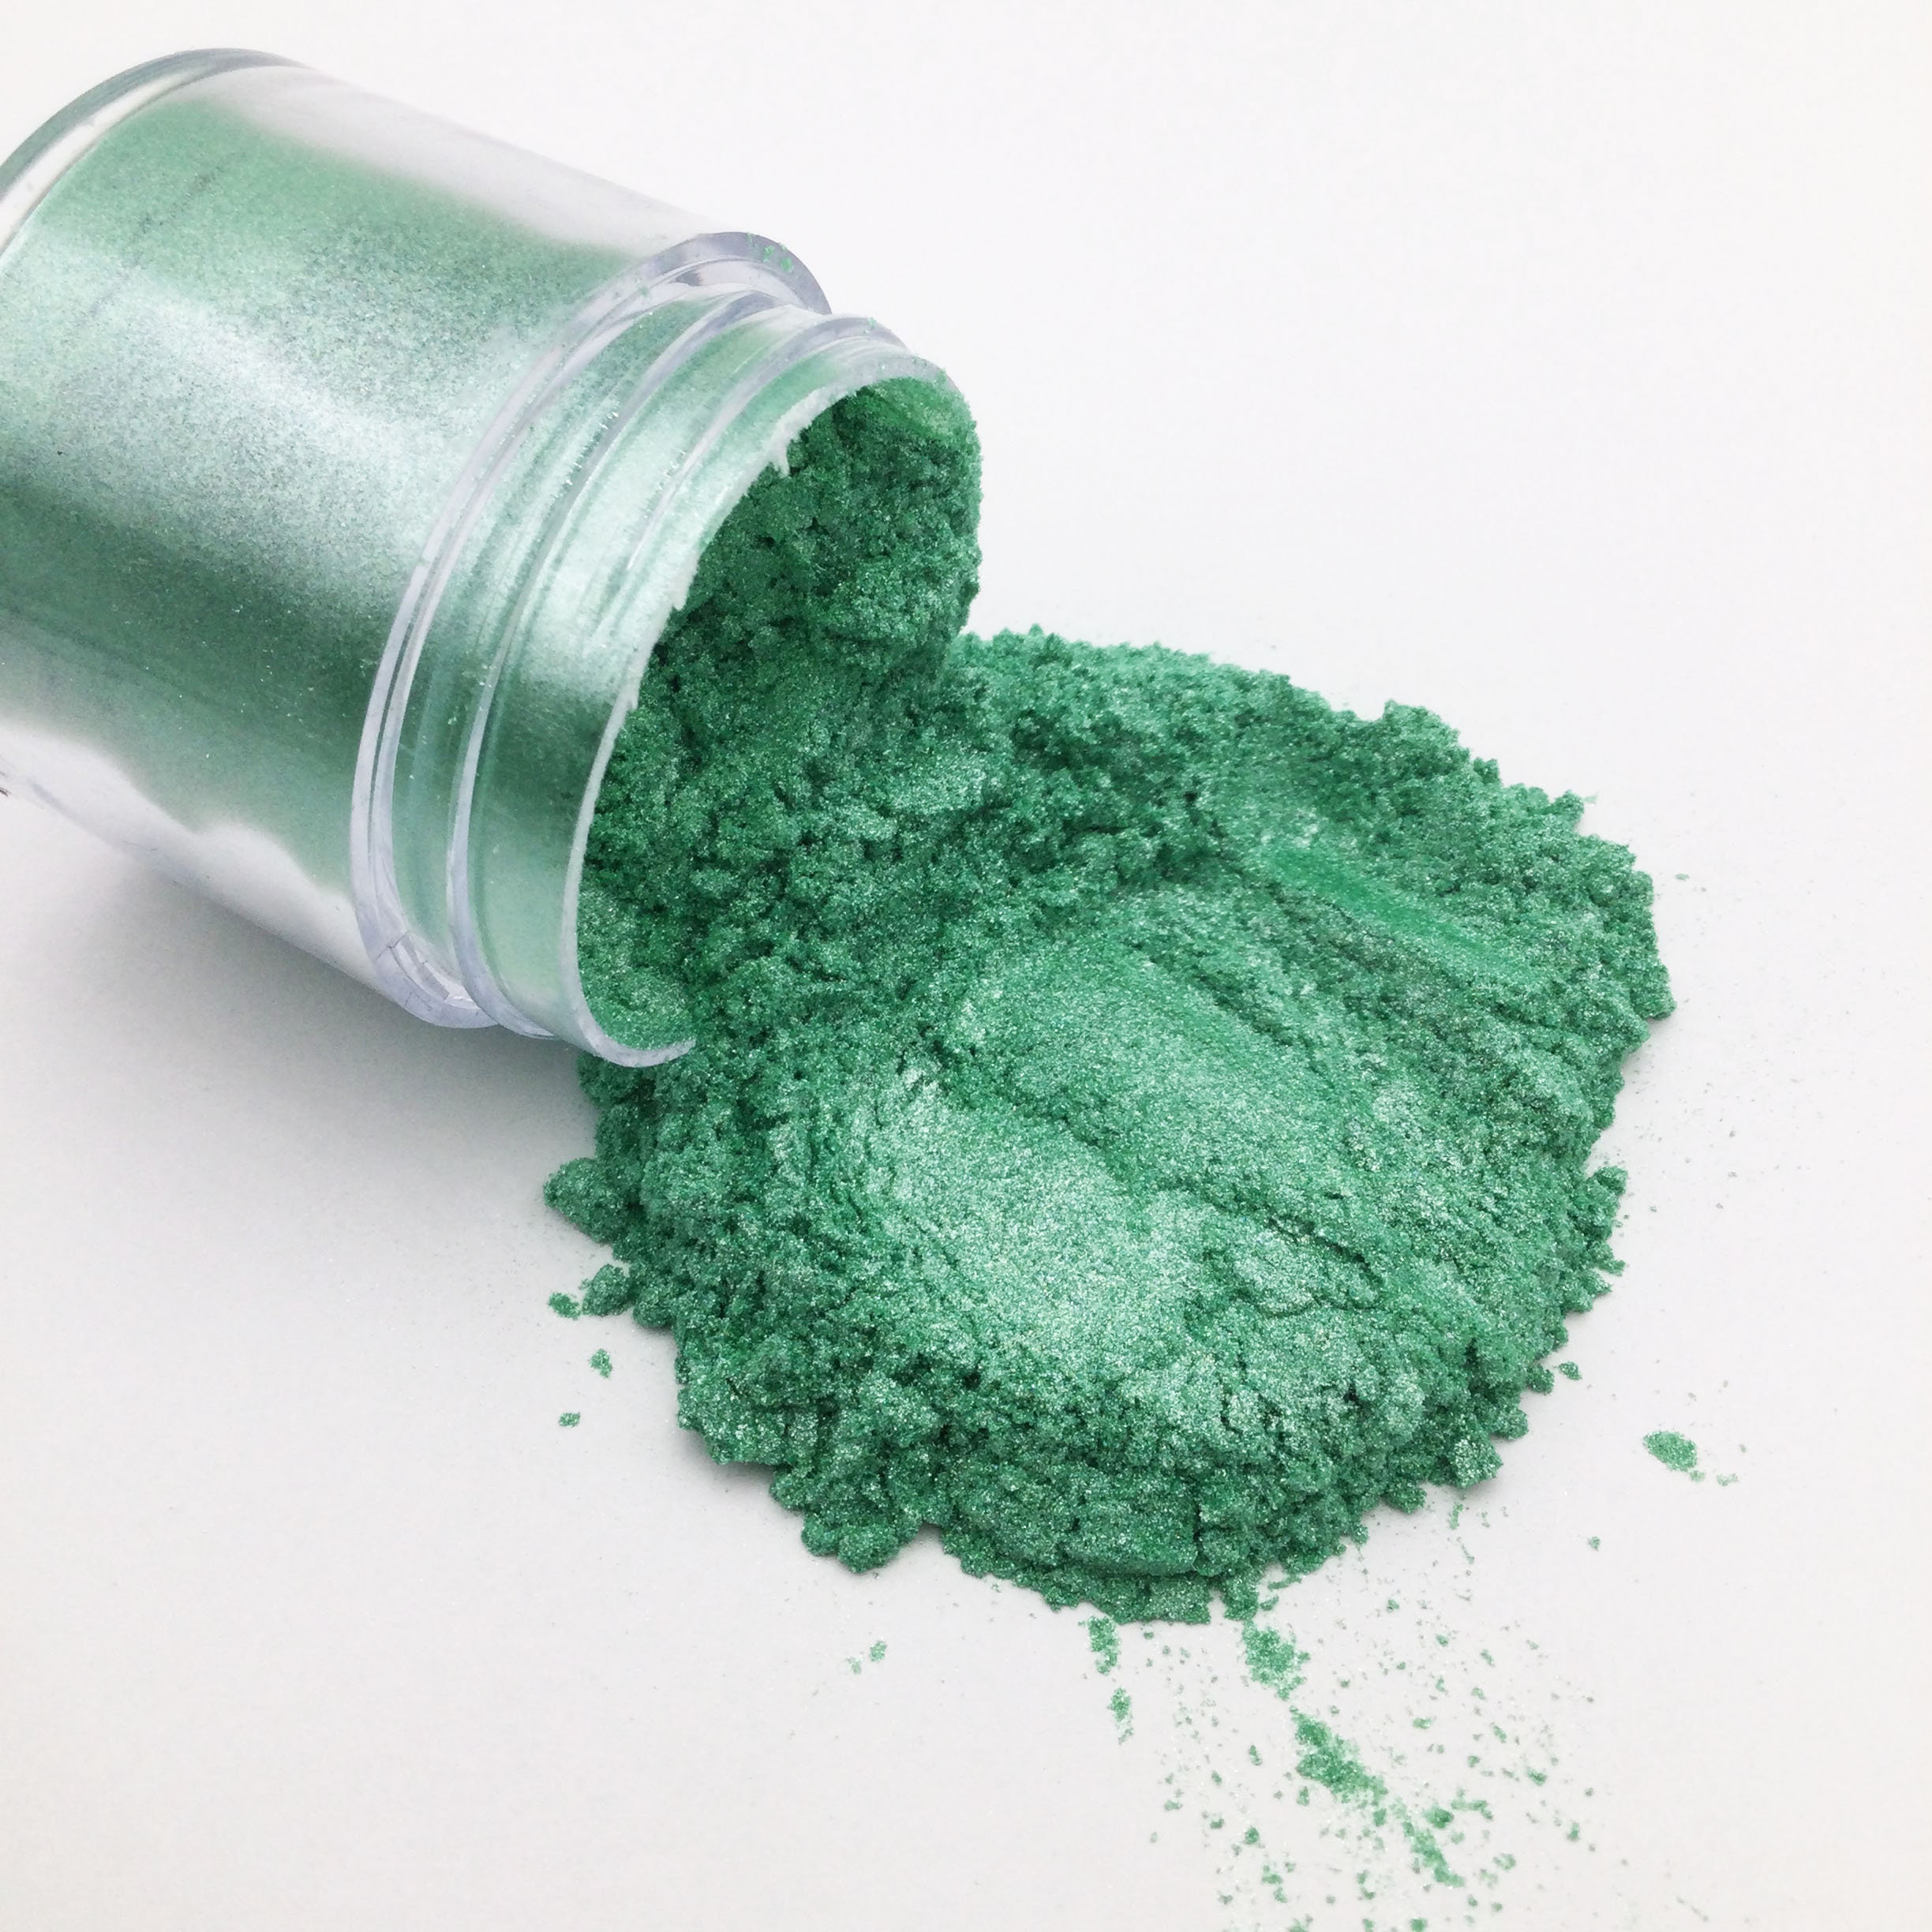 PERIDOT GREEN Mica Powder Pigment, Cosmetic Grade, Mica Powder for